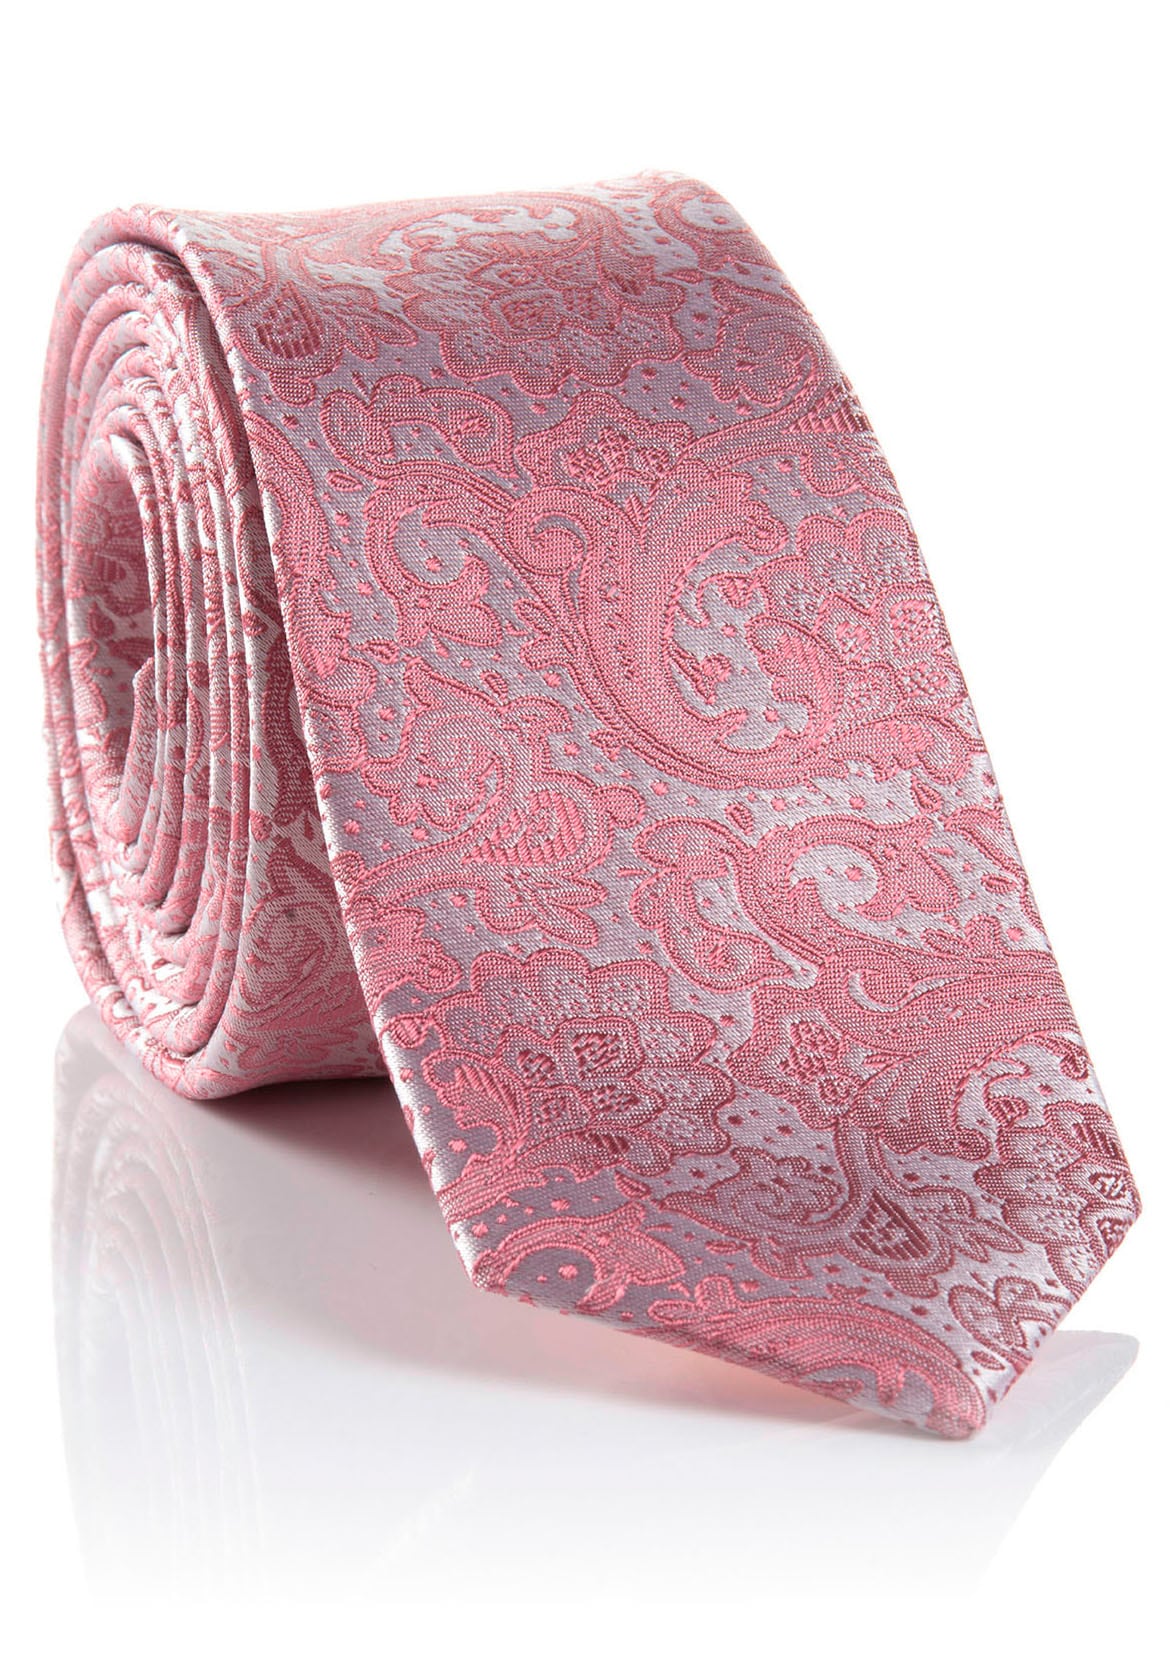 UNIVERSAL bestellen aus Paisley-Muster reiner | MONTI Seide, »LELIO«, Krawatte online Krawatte